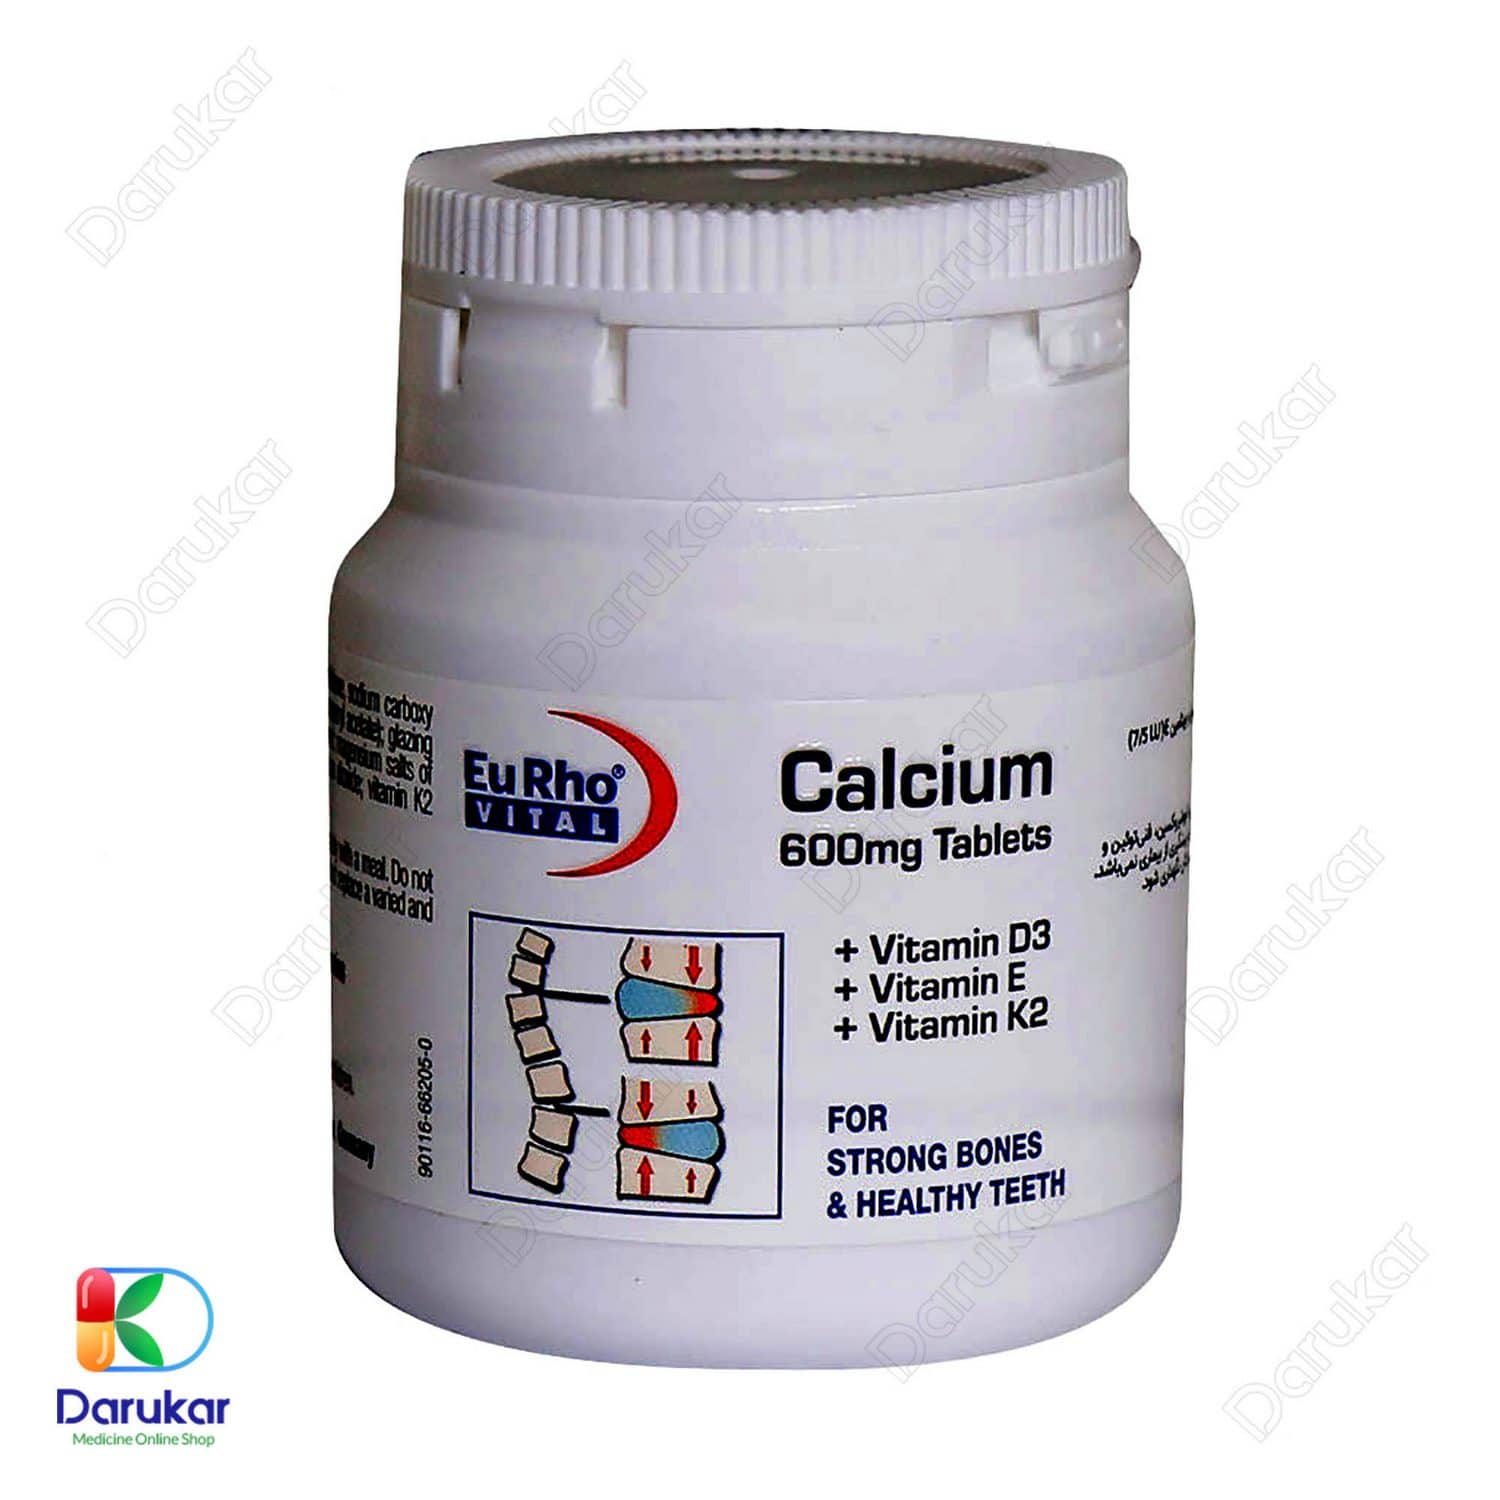 EurhoVital Calcium 600 mg tabs Image Gallery1